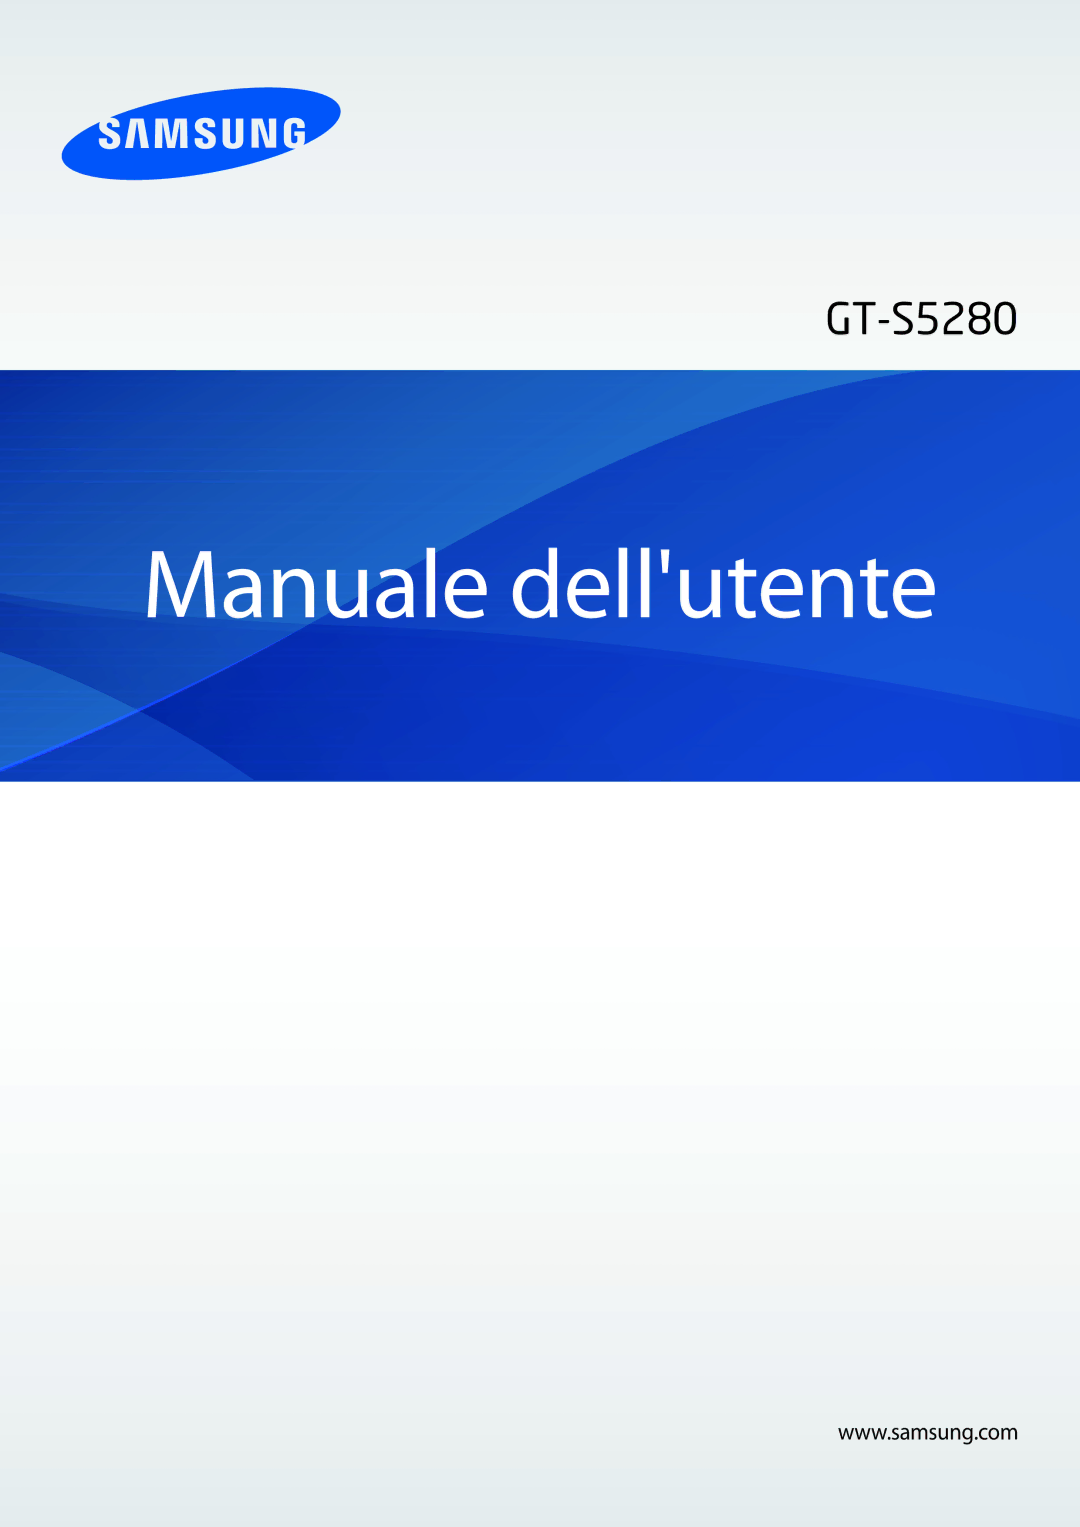 Samsung GT-S5280RWAITV, GT-S5280LKAITV manual Manuale dellutente 